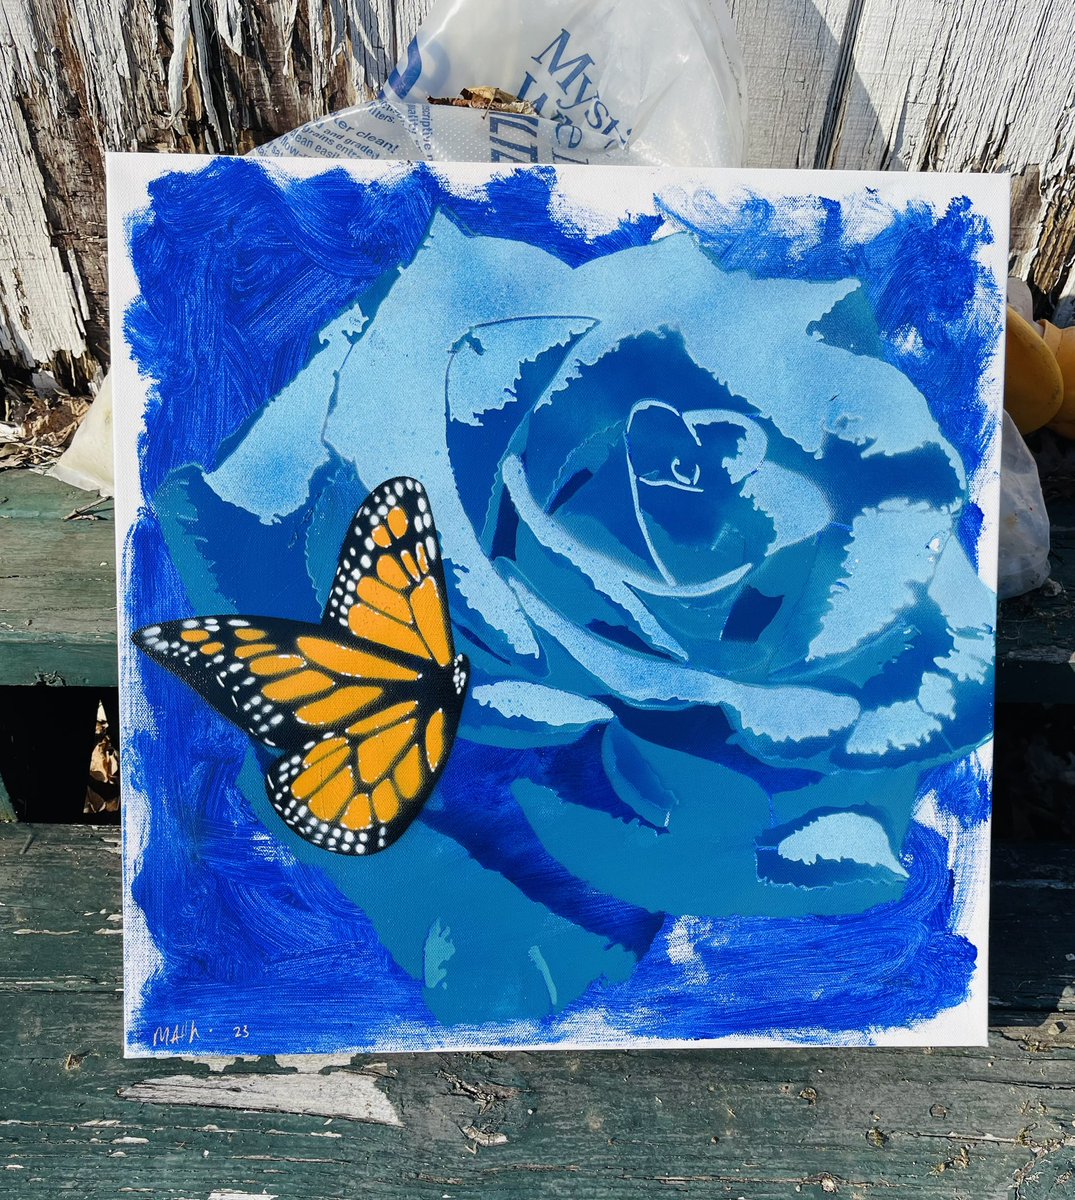 SIGNS OF SPRING 🌸 
20x20 acrylic and spray 

#Spring #art #artwork #artgallery #newyorkartgallery #painting #artist #artwork #painter #fineart #flower #flowerpainting #butterfly